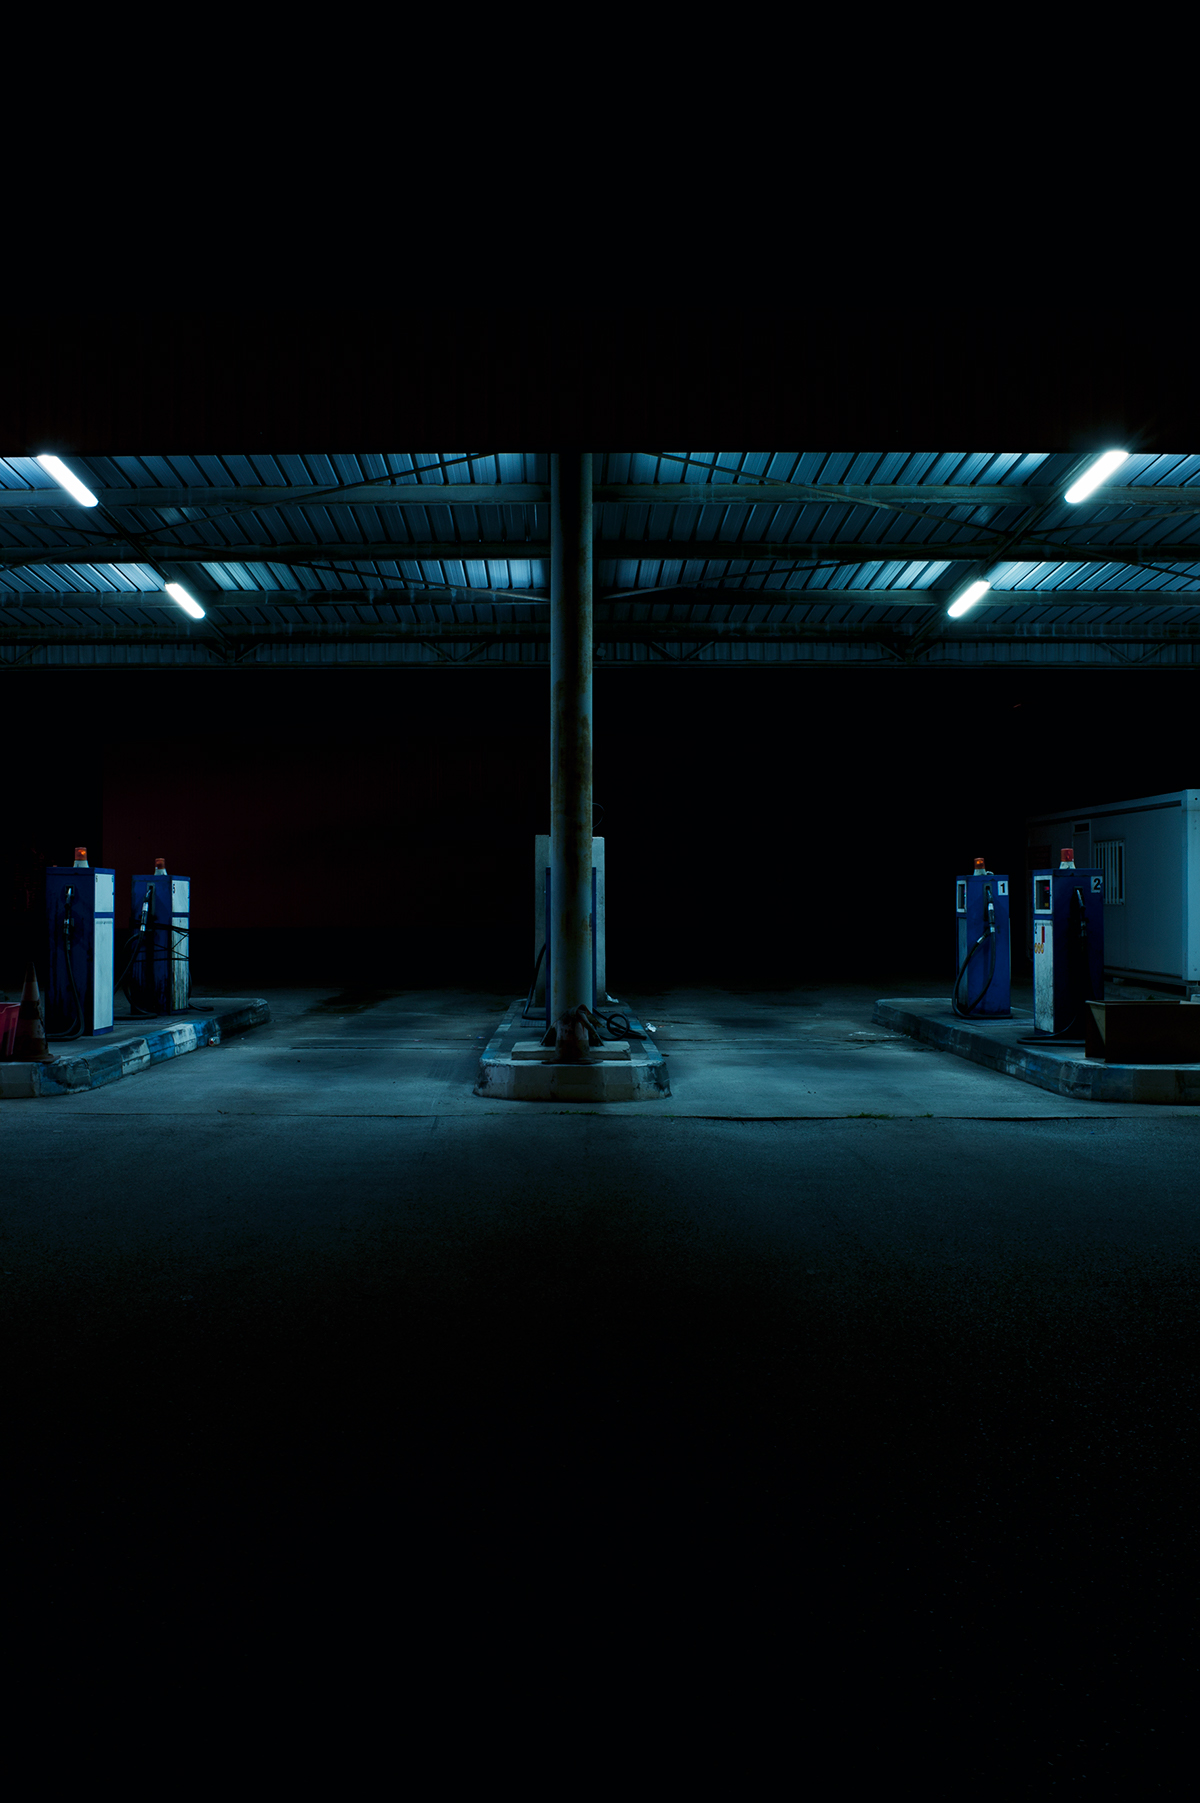 petrol STATION night dark scream movie light